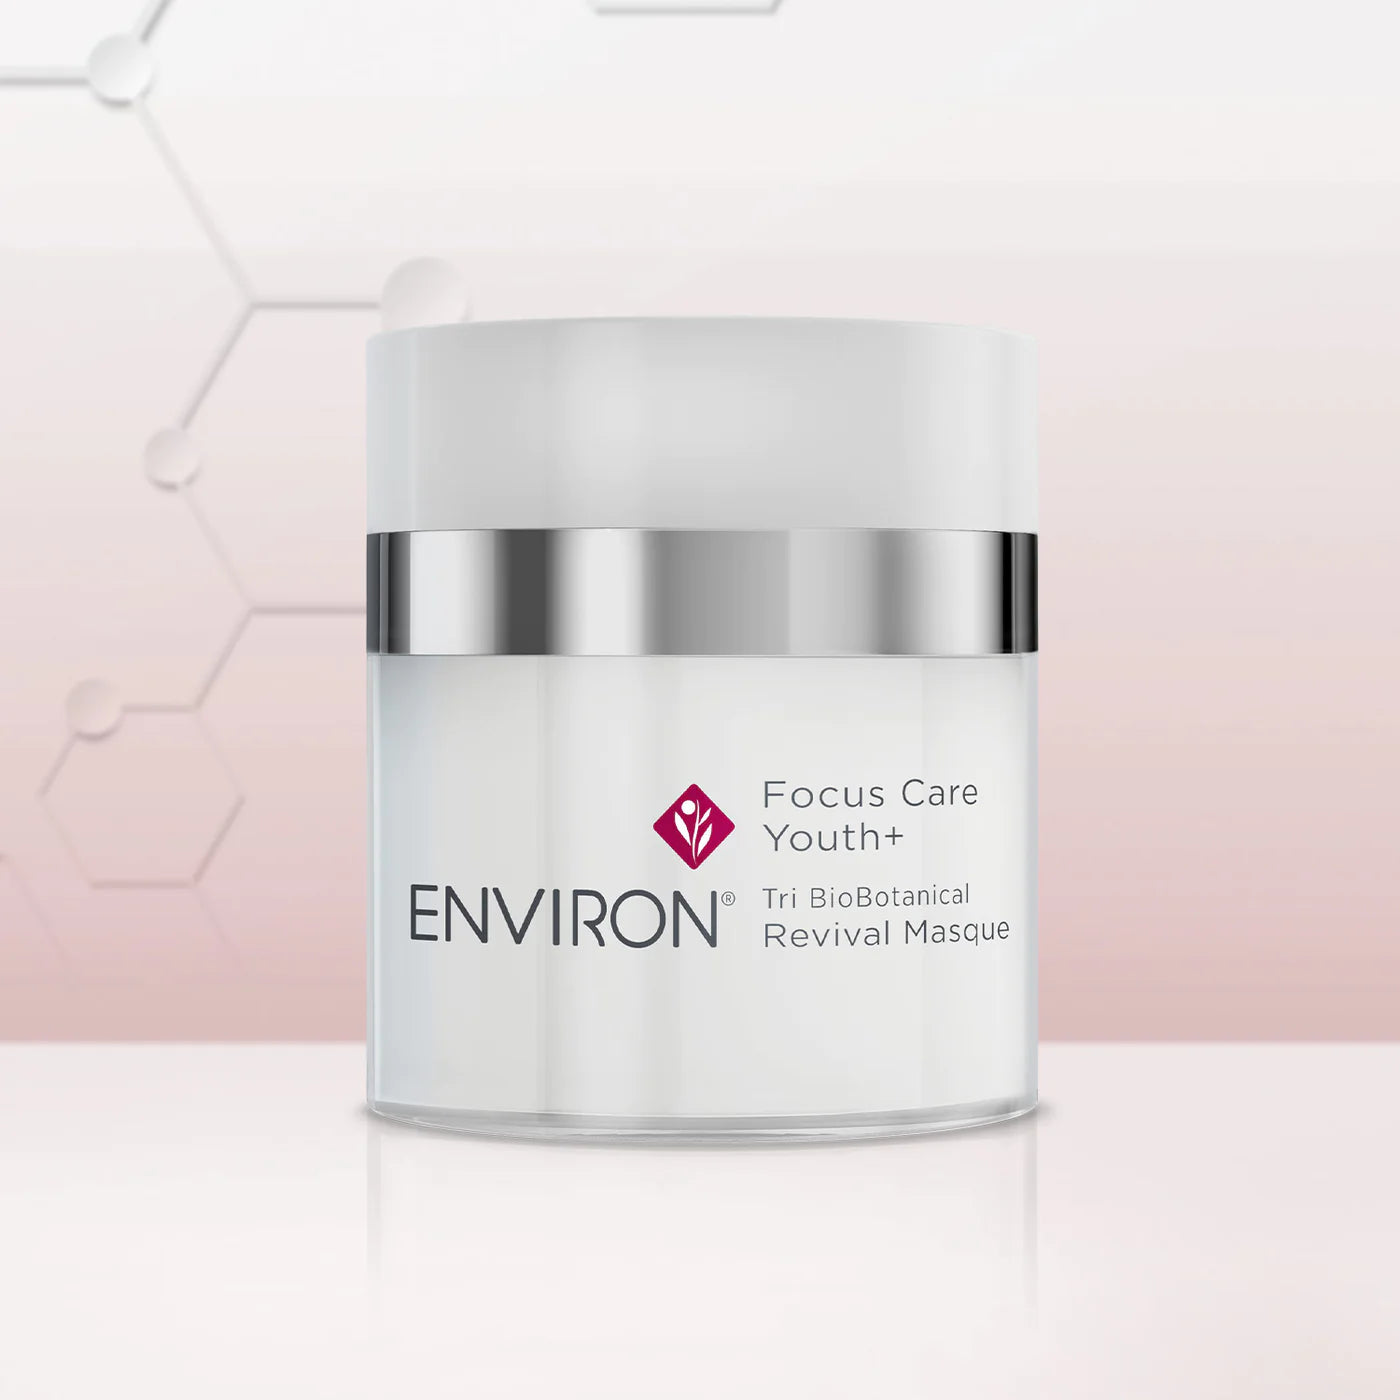 ENVIRON - Focus Care Youth+ Tri BioBotanical Revival Masque